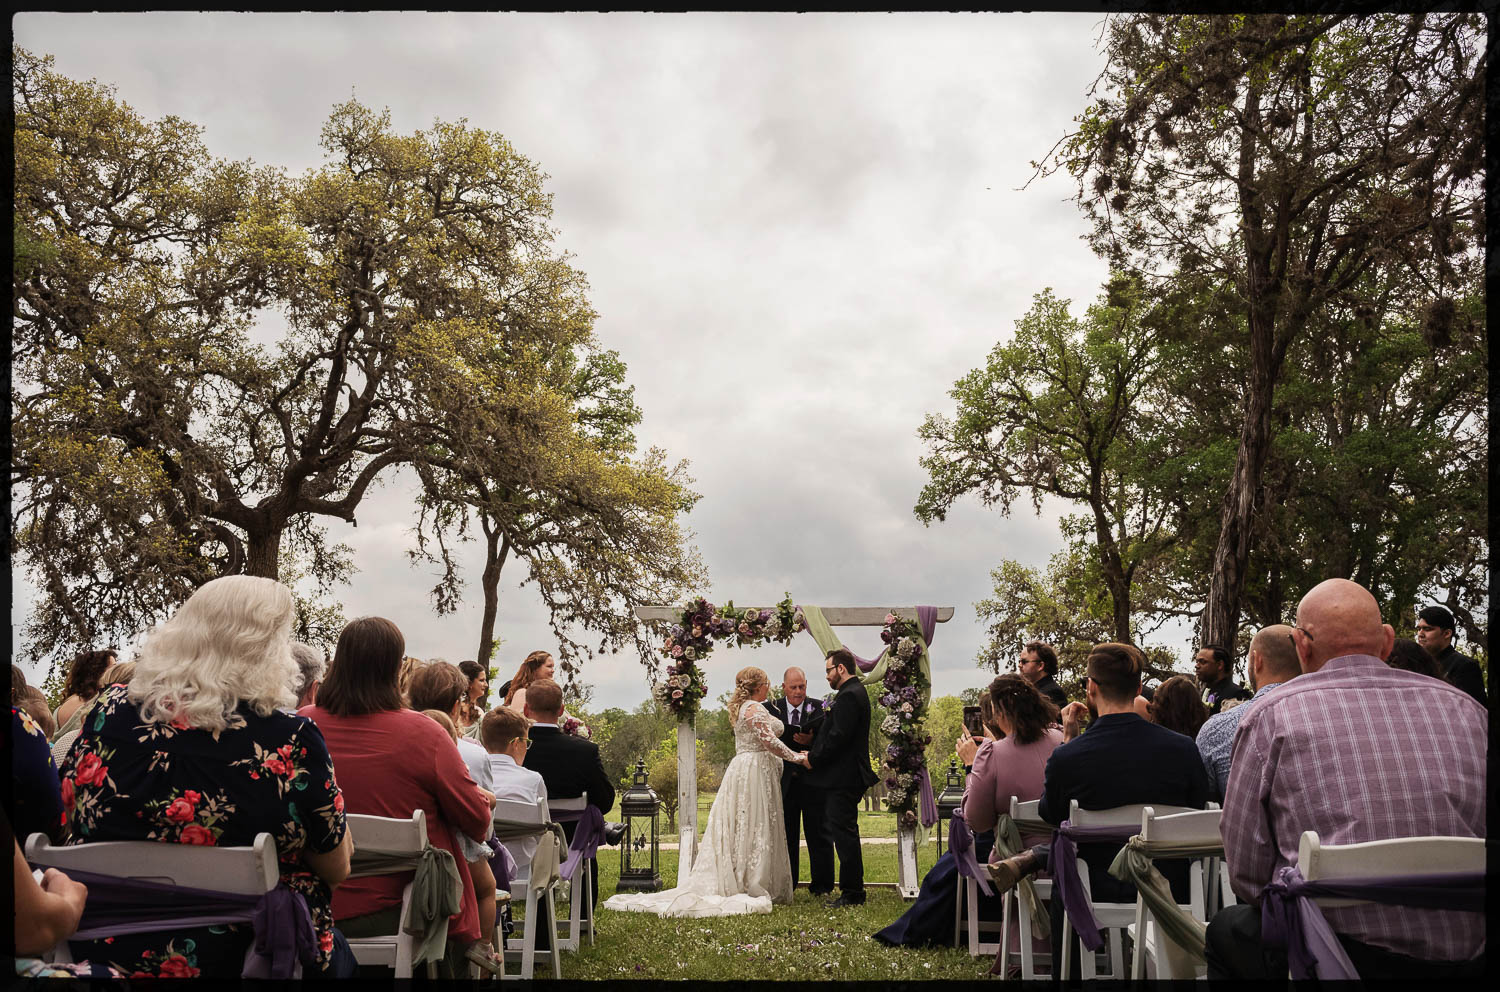 030 Eagle Dancer Ranch Boerne Hill Country Wedding+Reception Philip Thomas Photography L1005424 Edit